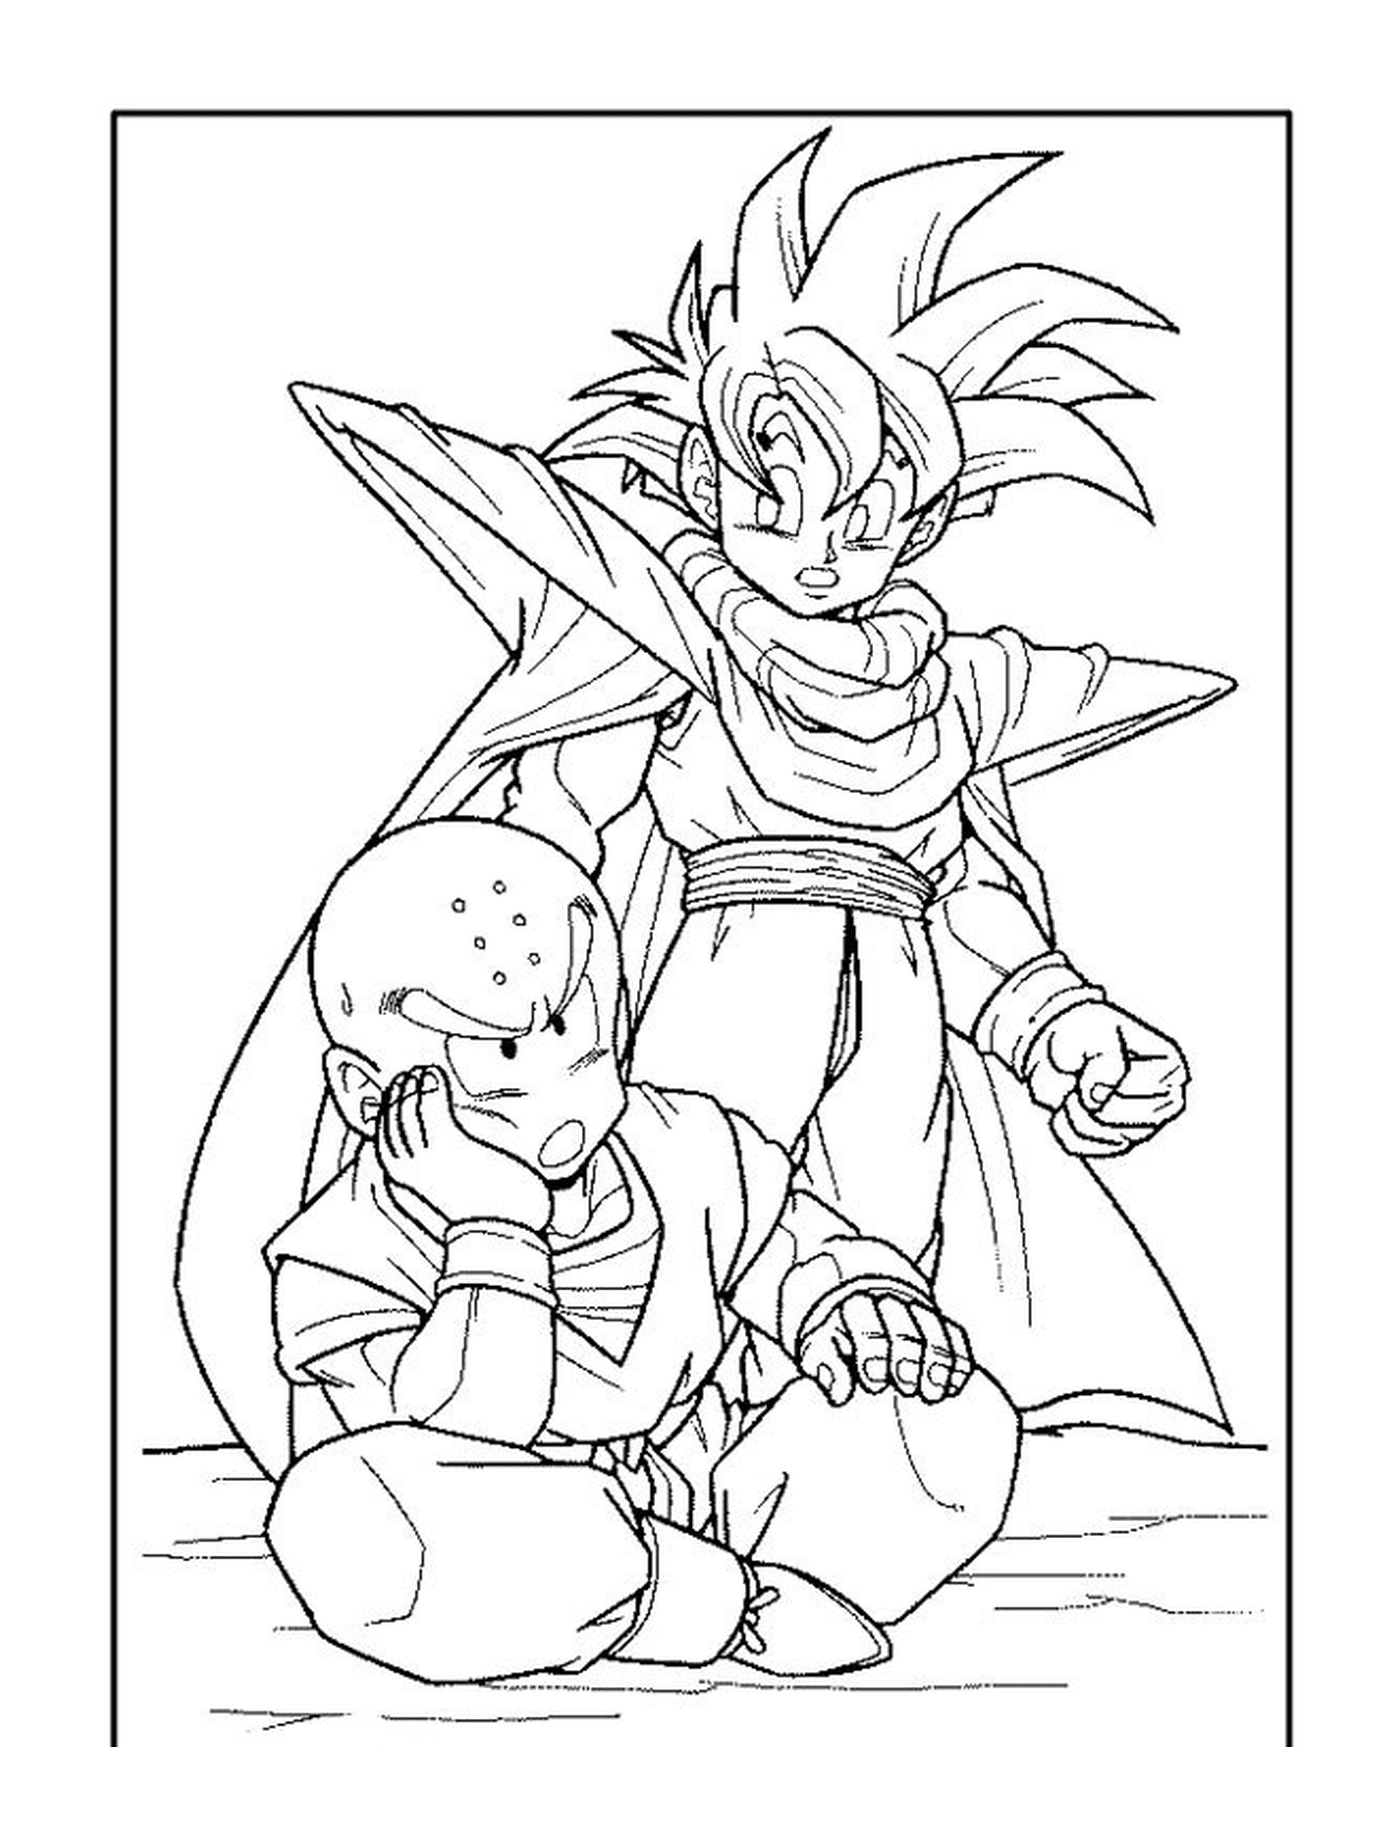  Goku y Krillin, dueto de Dragon Ball Z 